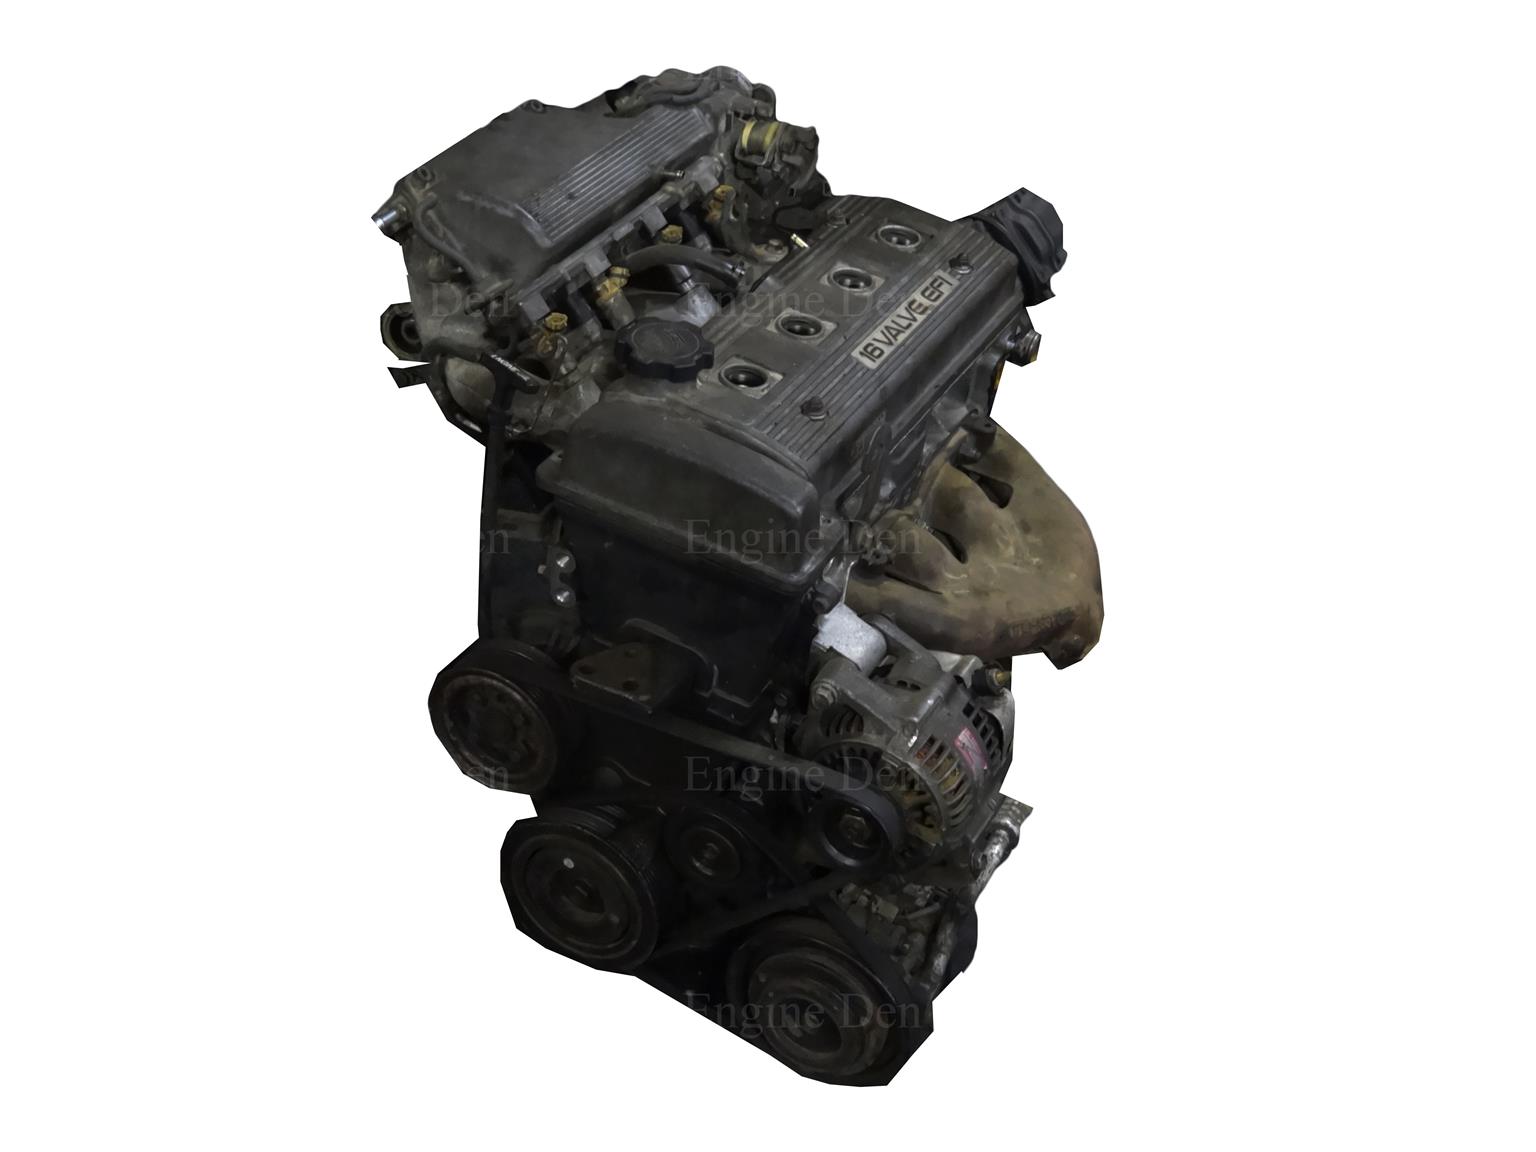 Toyota 7AFE 1.8 used engine